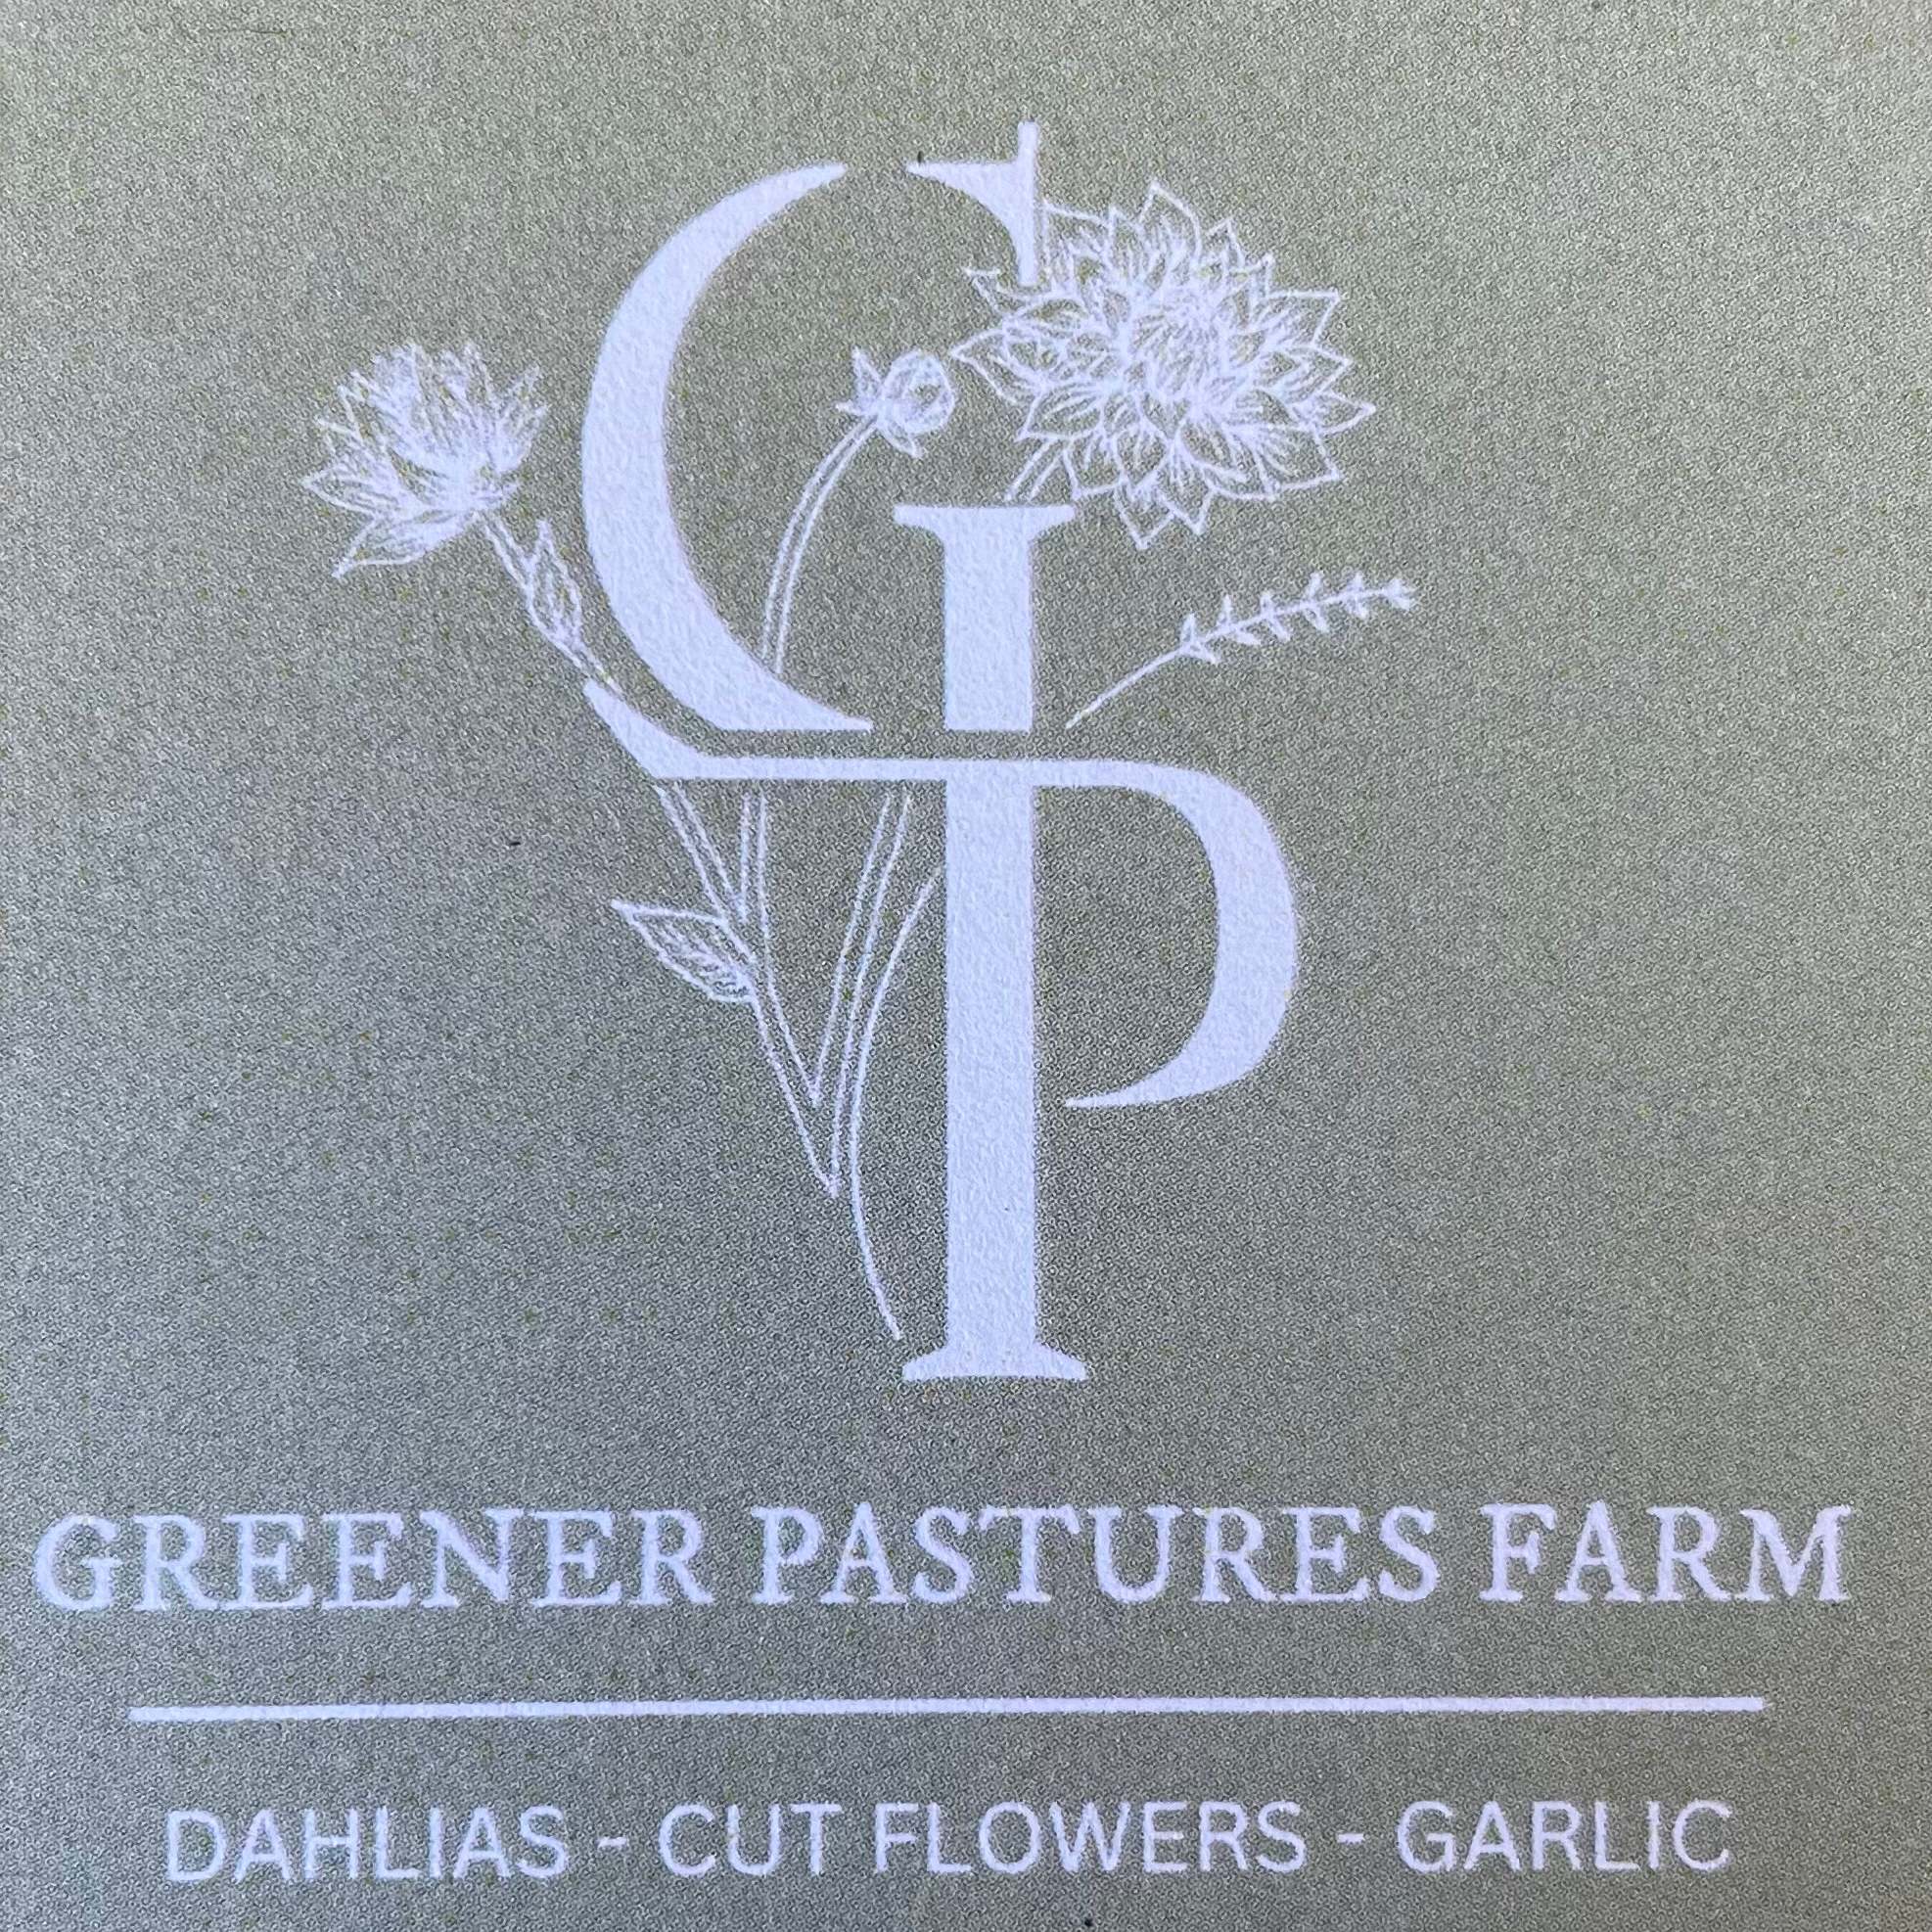 Greener Pastures Farm